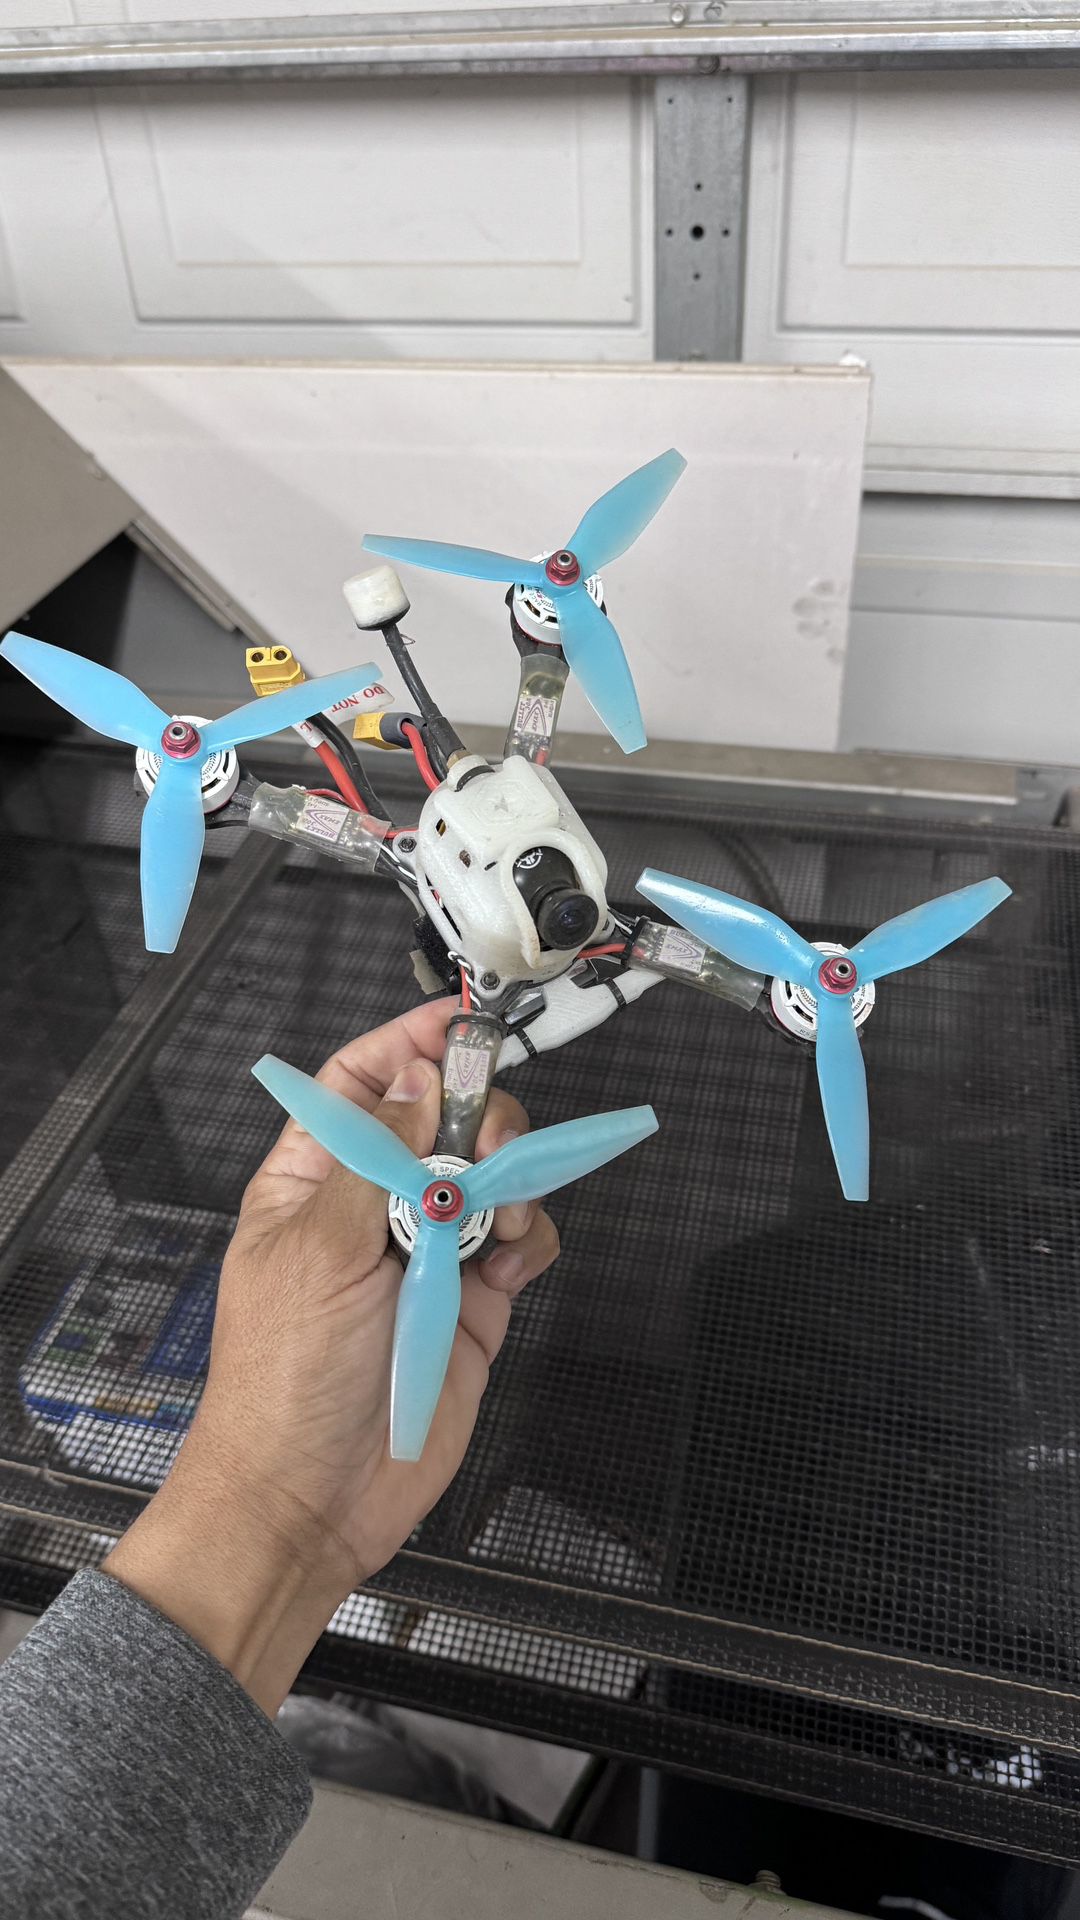 5” Racing Quadcopter